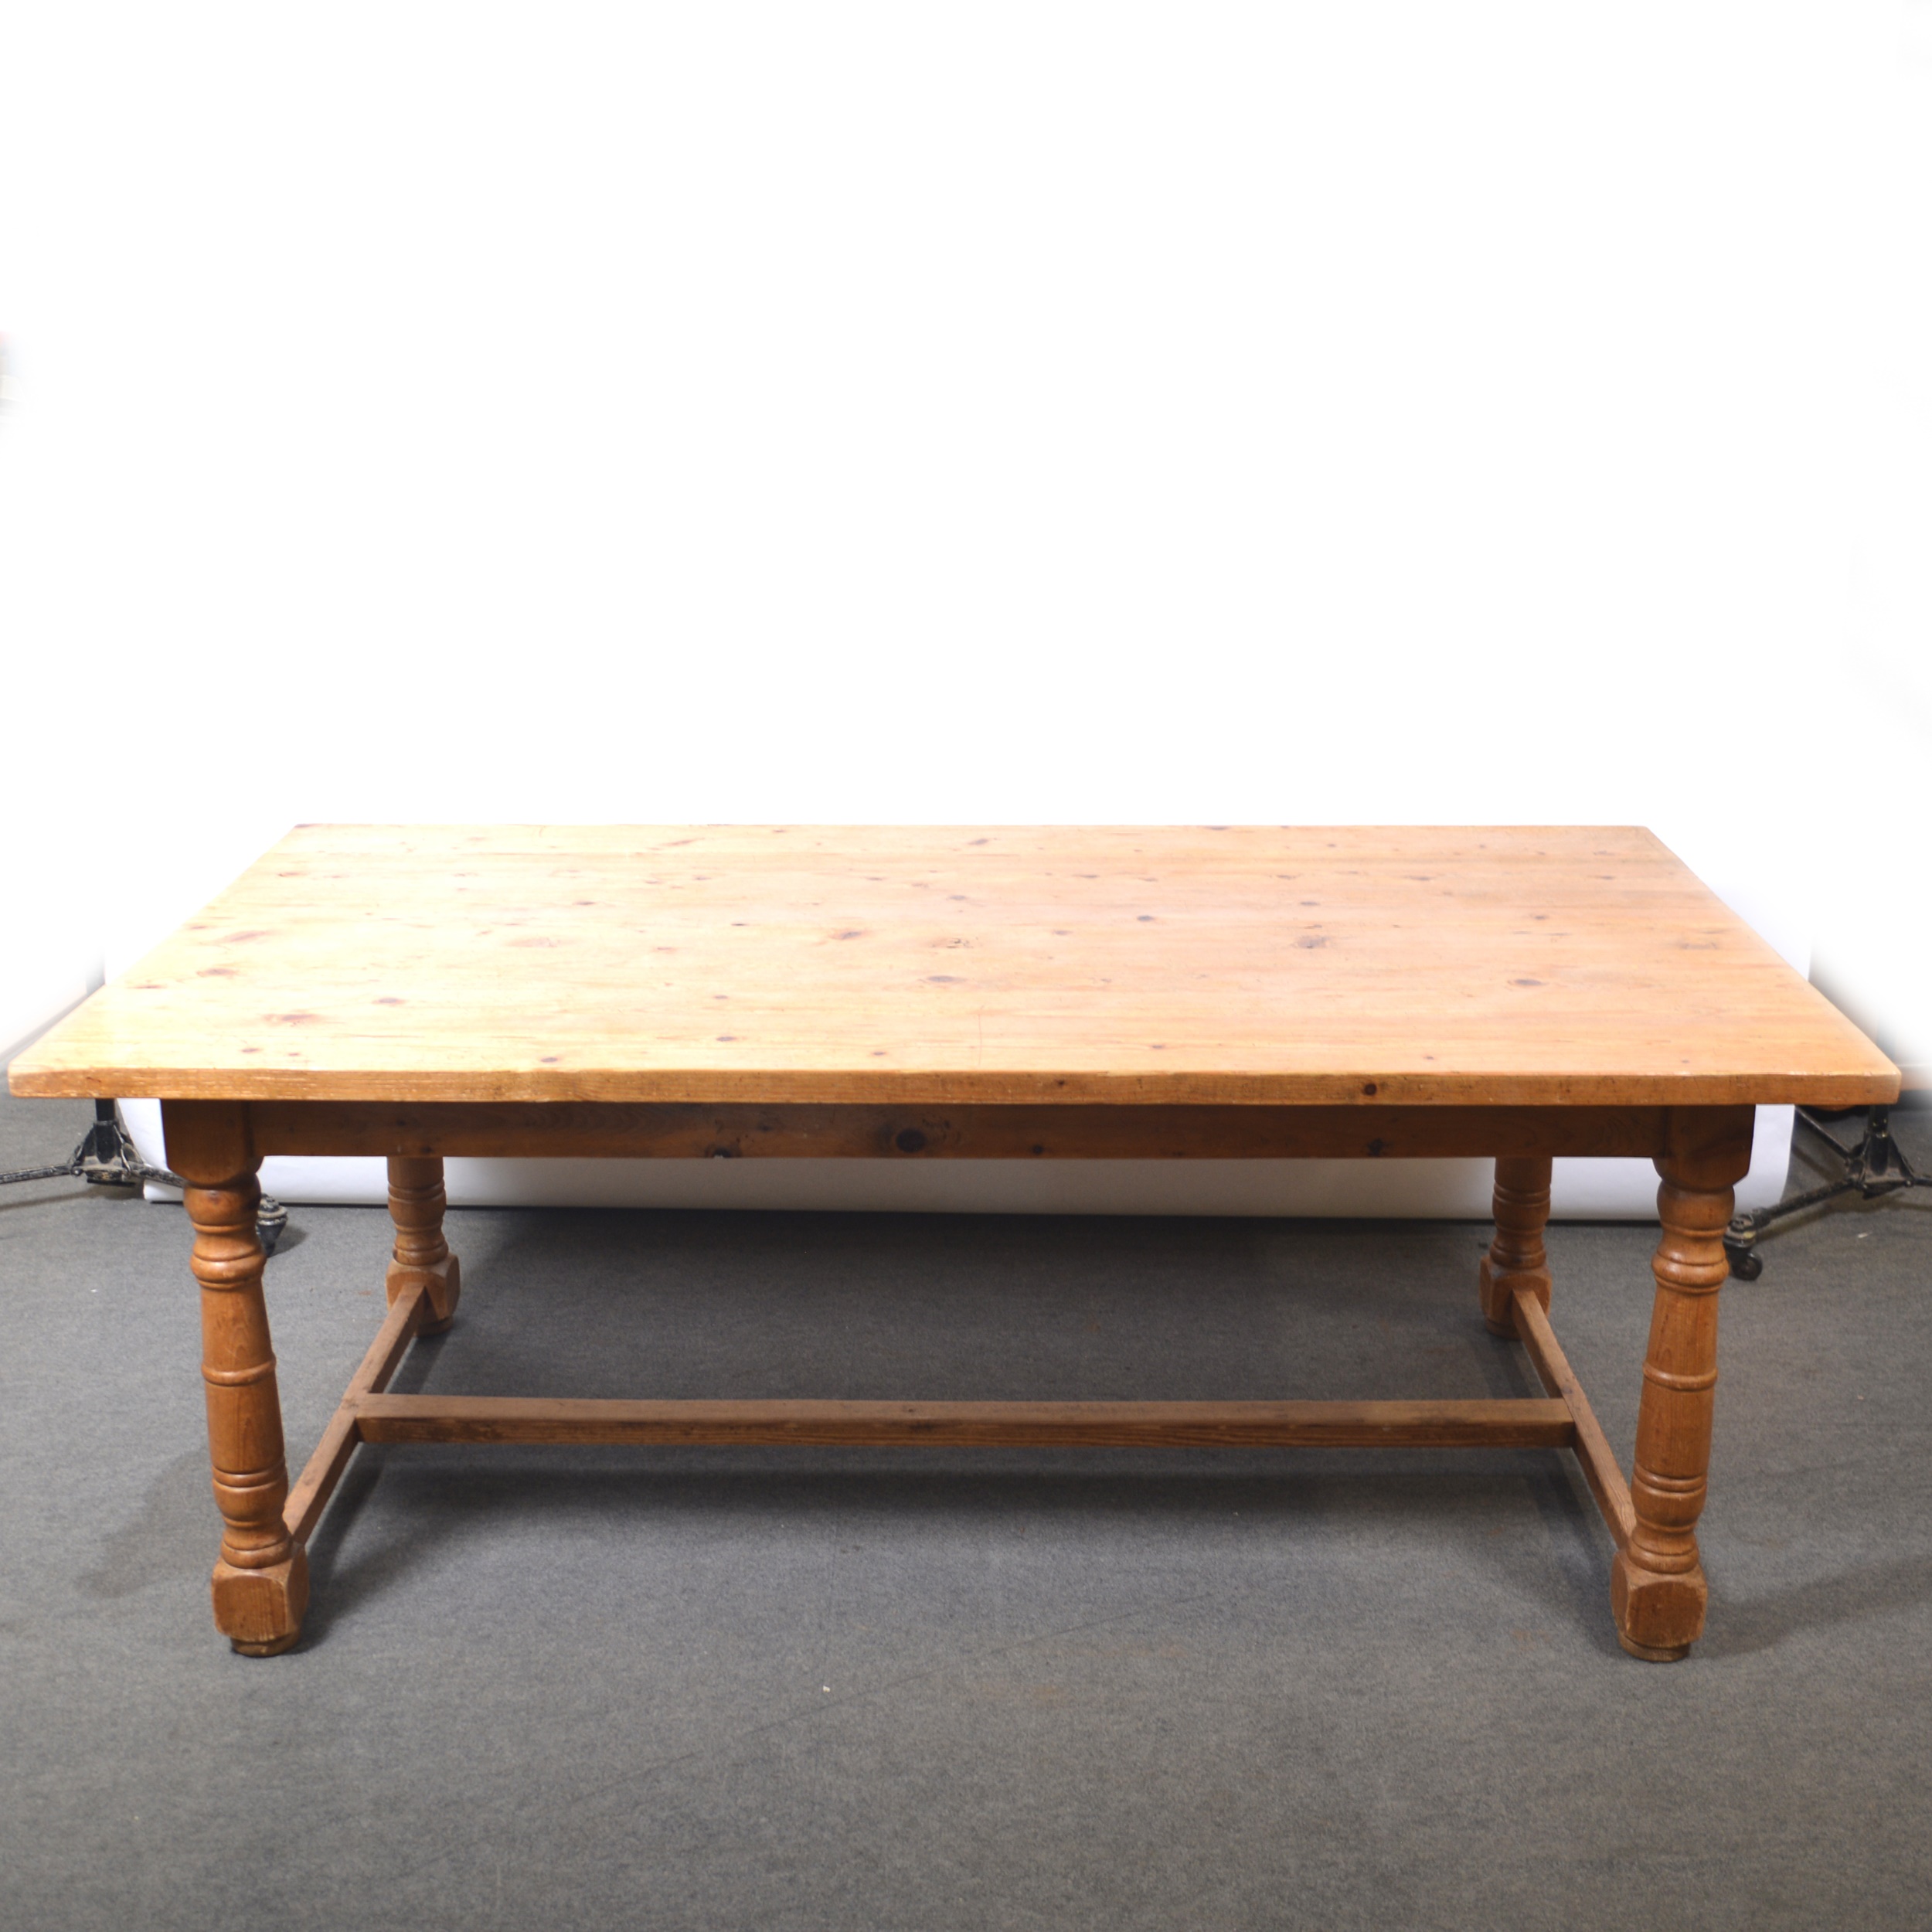 Large pine kitchen table